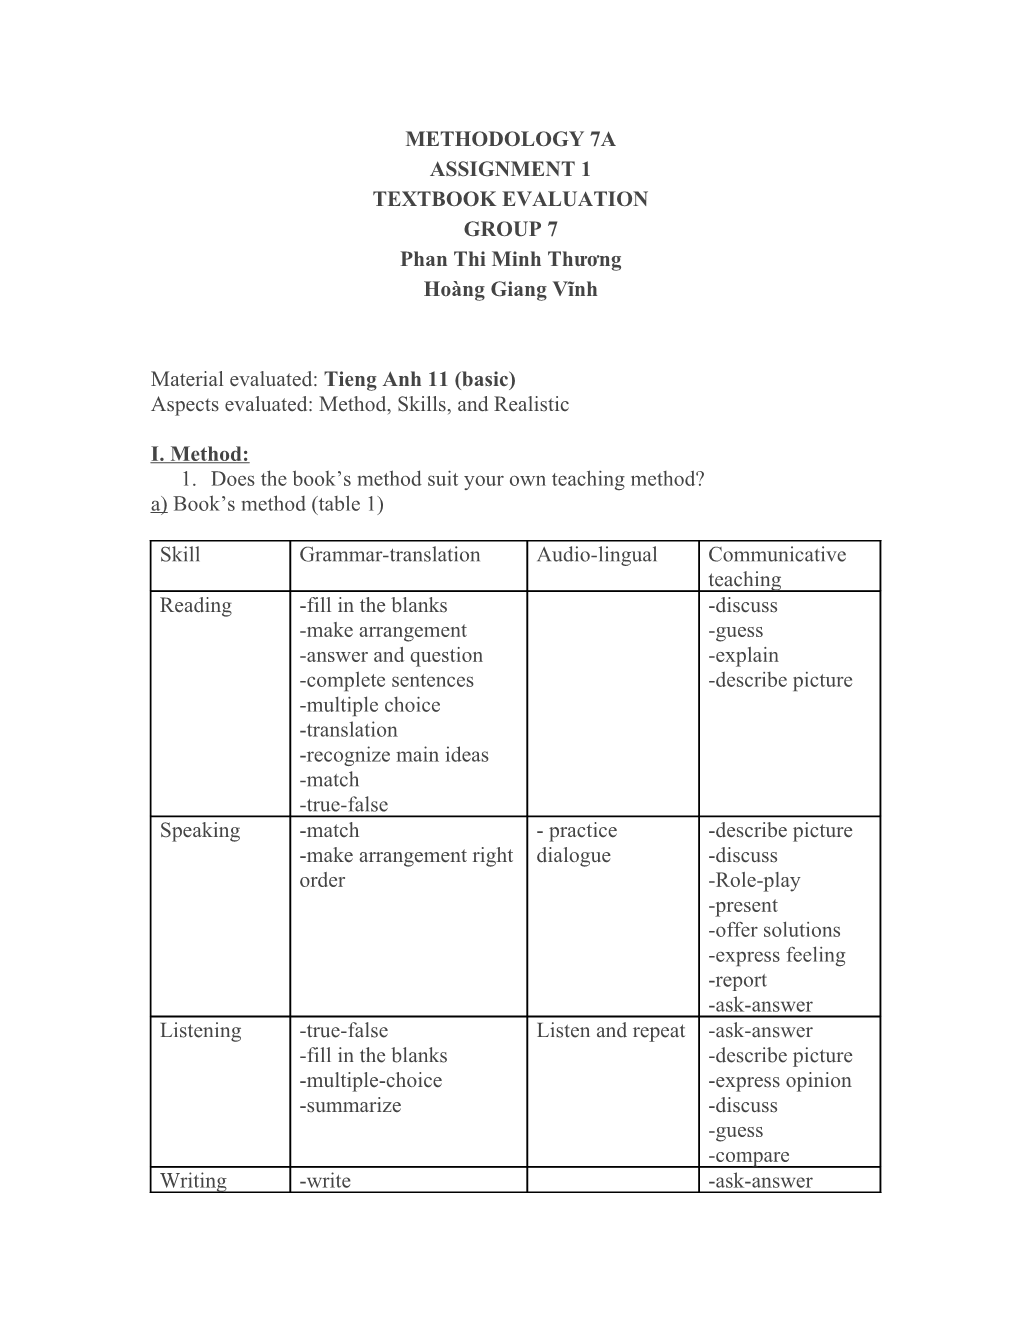 Textbook Evaluation s1